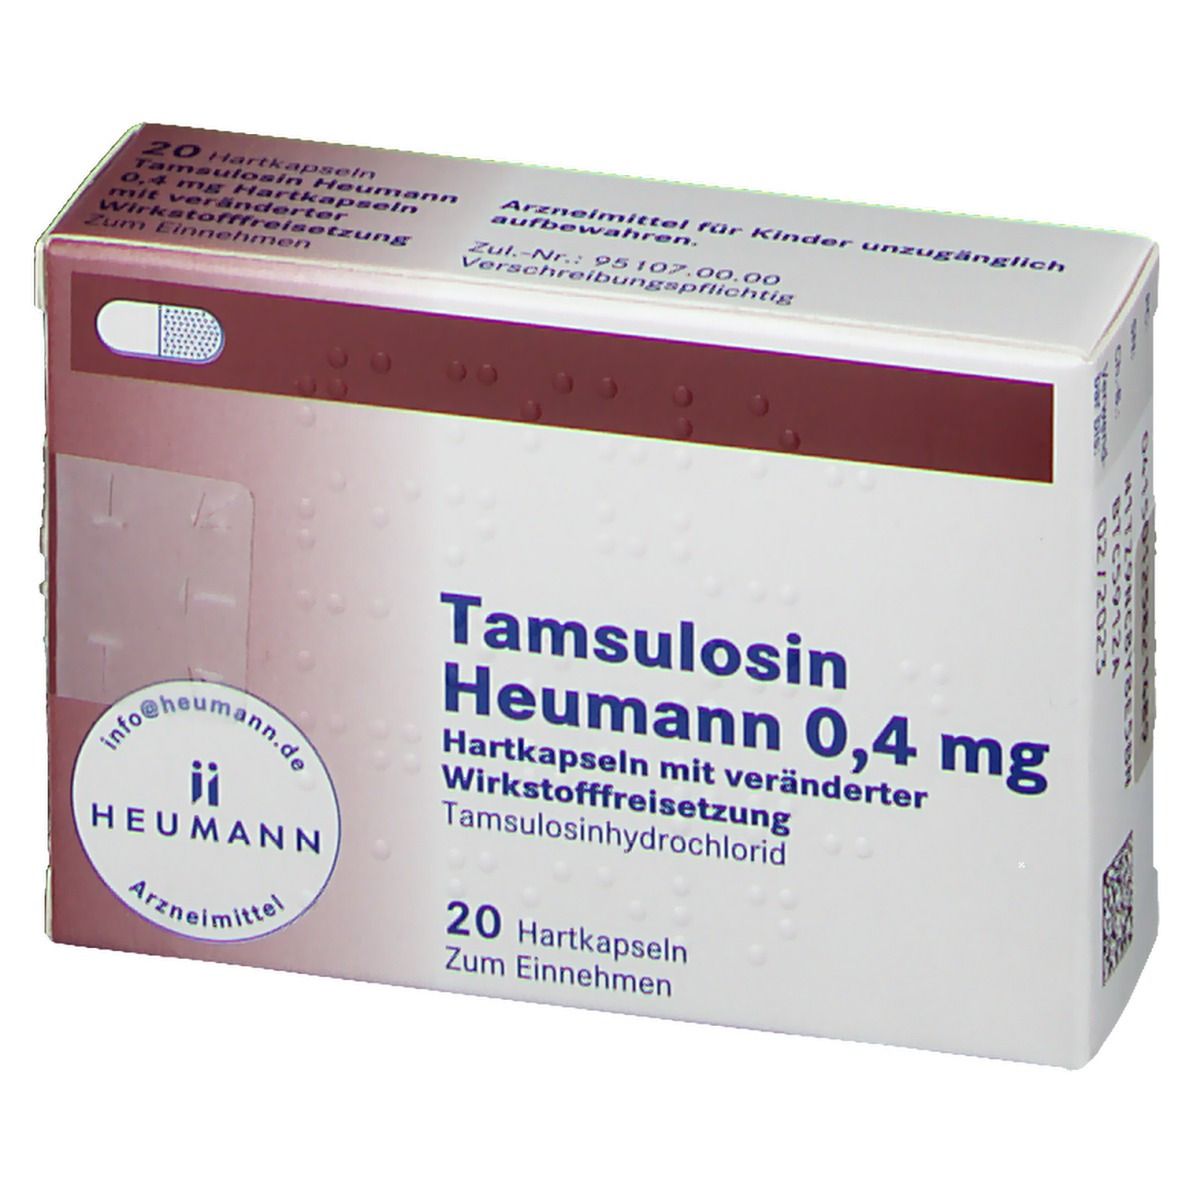 Tamsulosin Heumann 0,4 mg